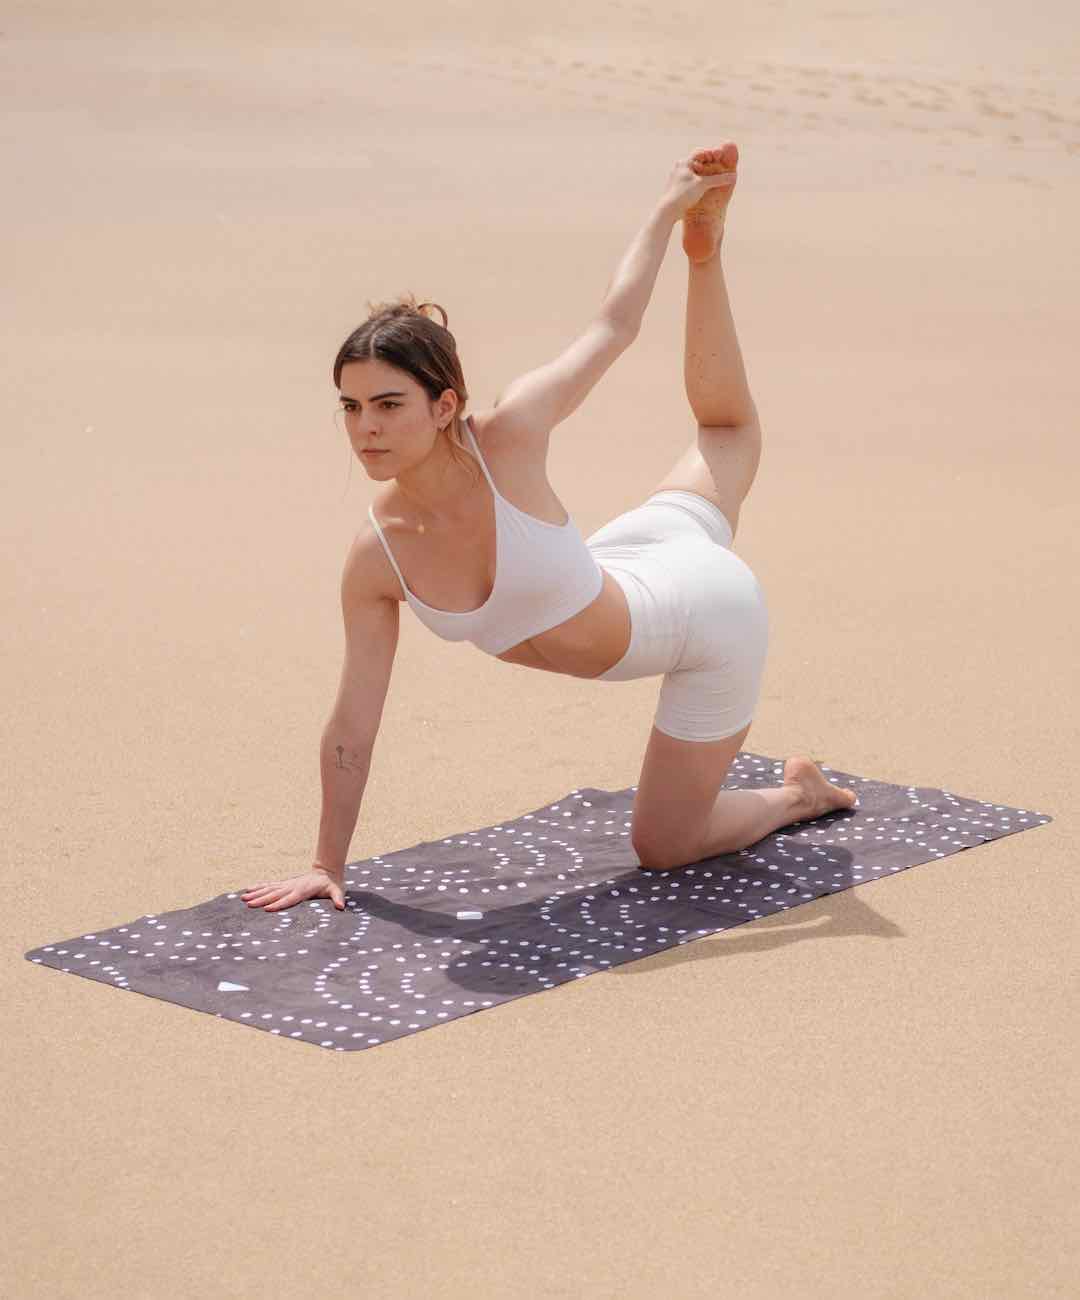 Portable Yoga Mat-Women doing Yoga On Beach Front View Image-Mikkoa Dancing Chakra Yoga Mat